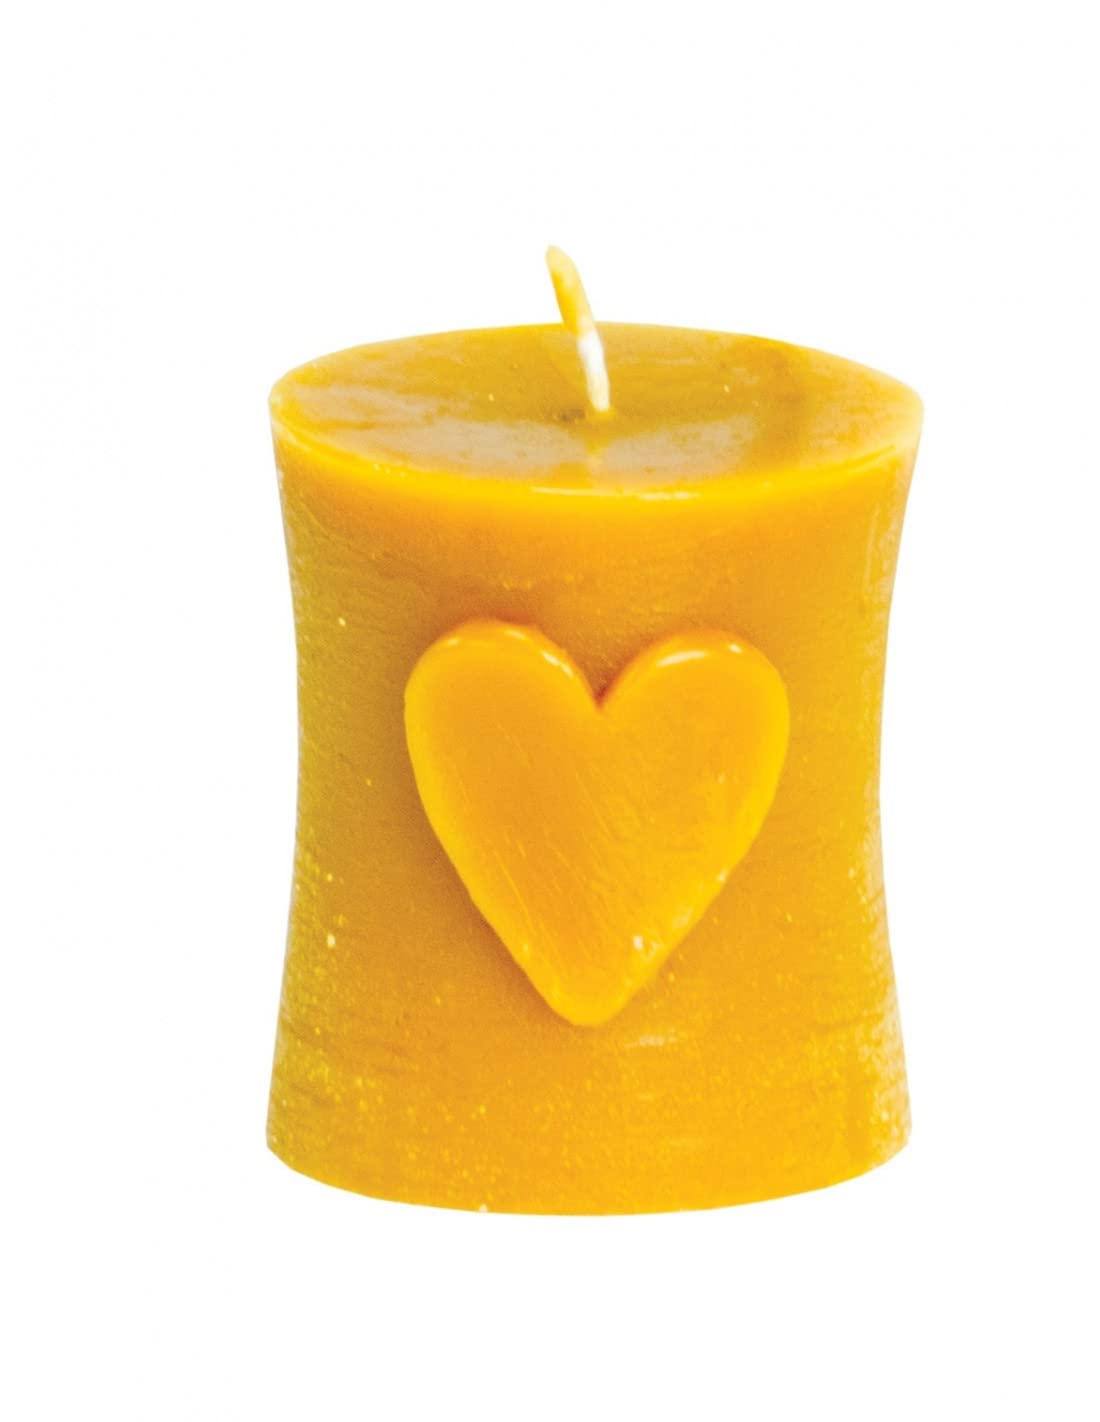 LYSON Kerzengießform Silikonform - Walze mit Herz, H.620 mm,Giessformen, Kerzenform, Osterdekoration Kerzengießform, Bienenwachs Kerzenherstellung wiederverwendbar